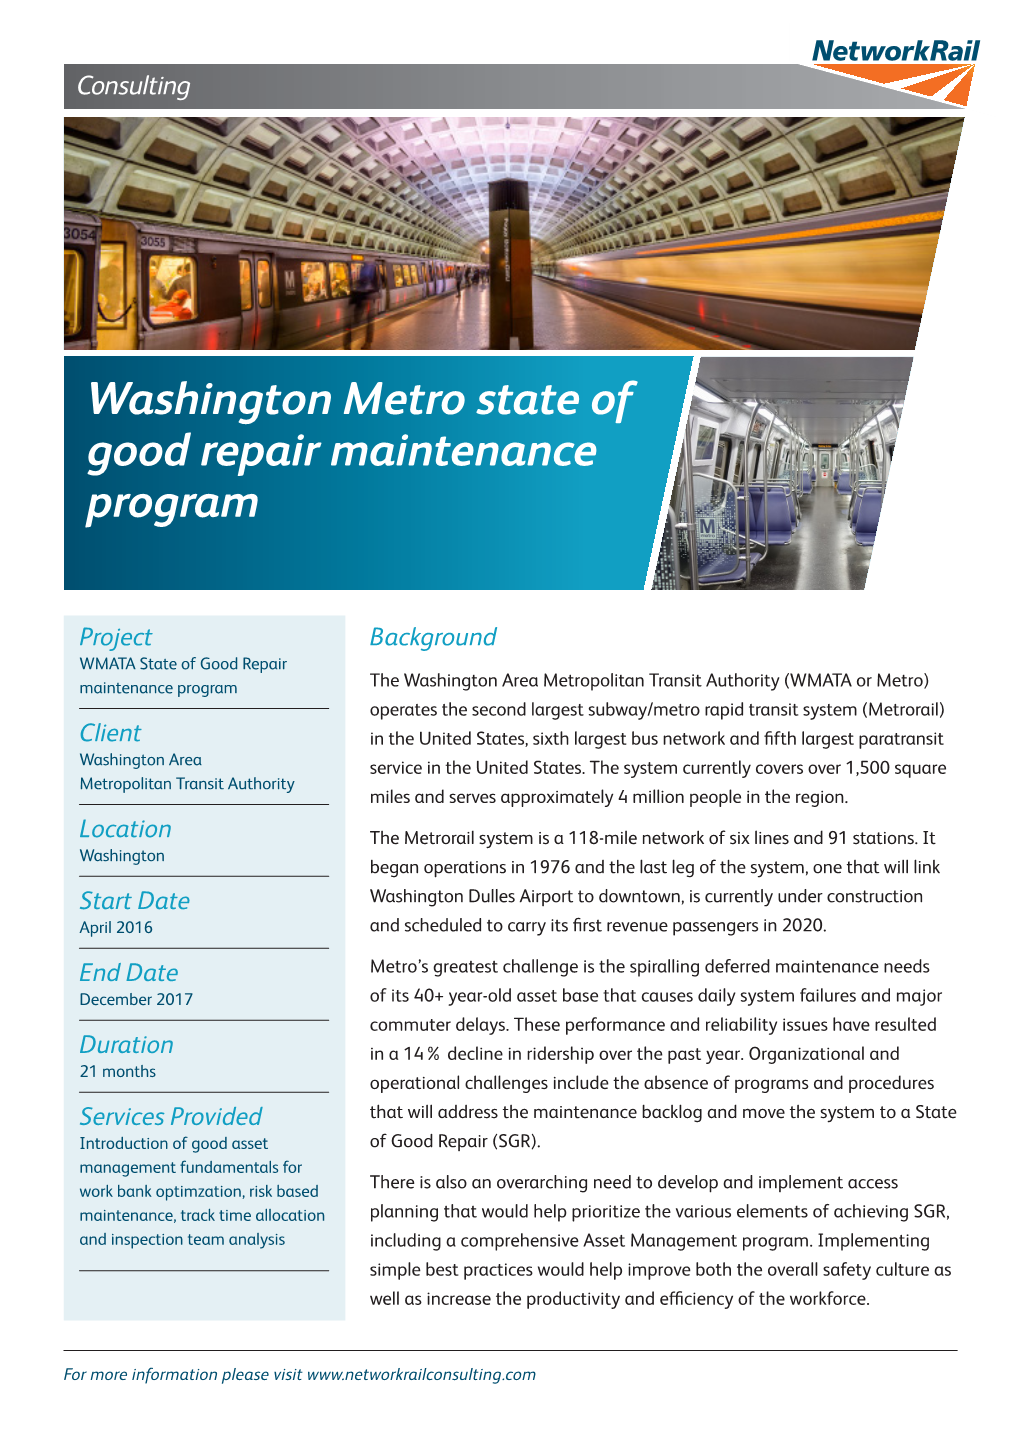 Washington Metro State of Good Repair Maintenance Program